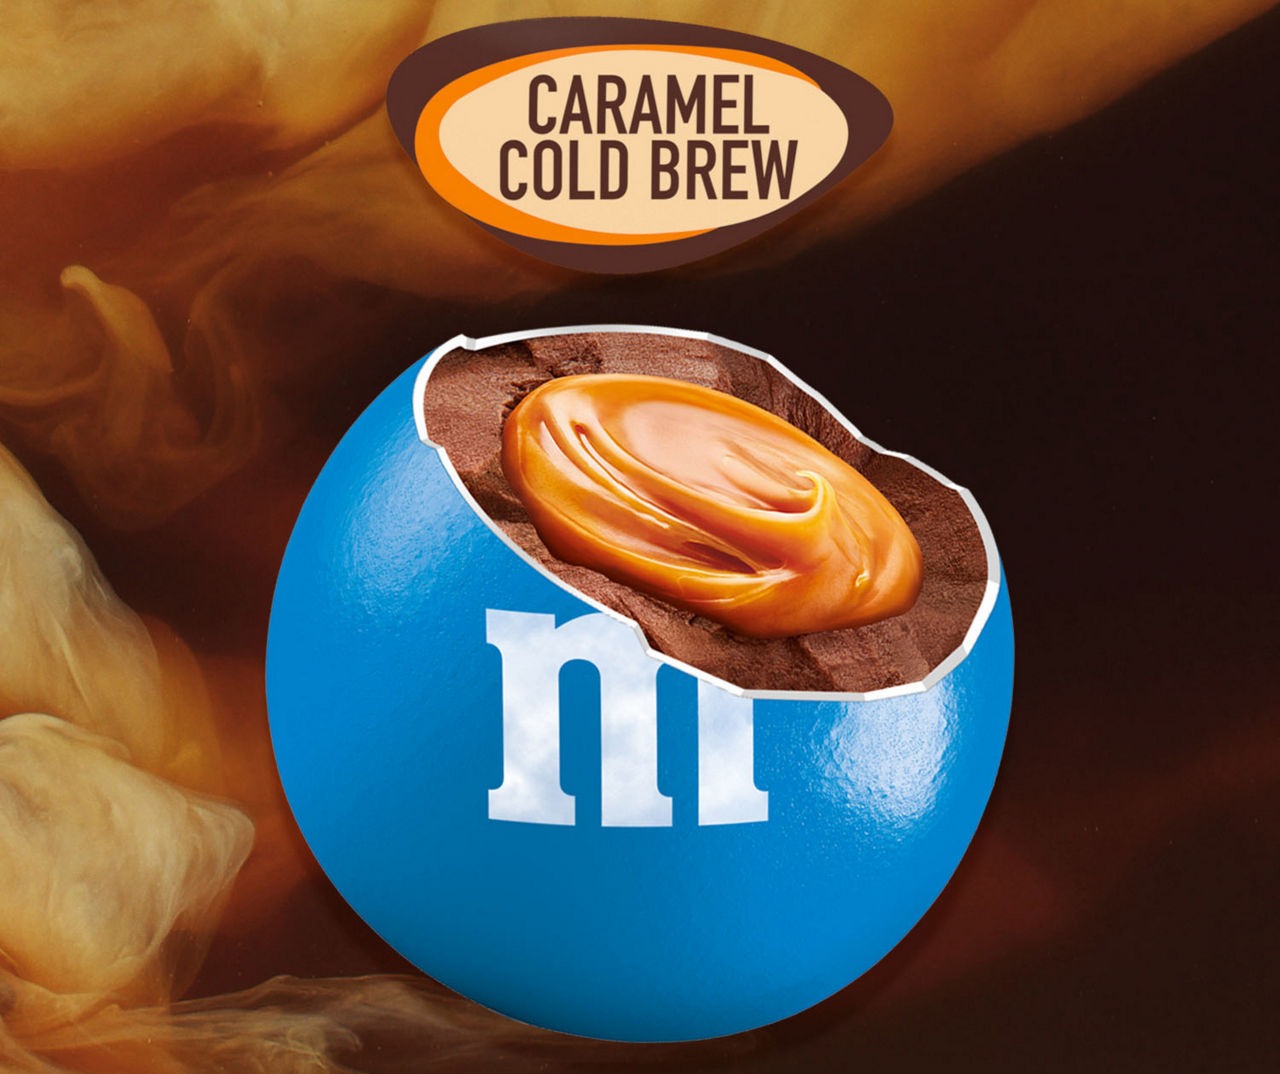 M&M's Caramel Cold Brew Chocolate Candy, 1.4 Oz.